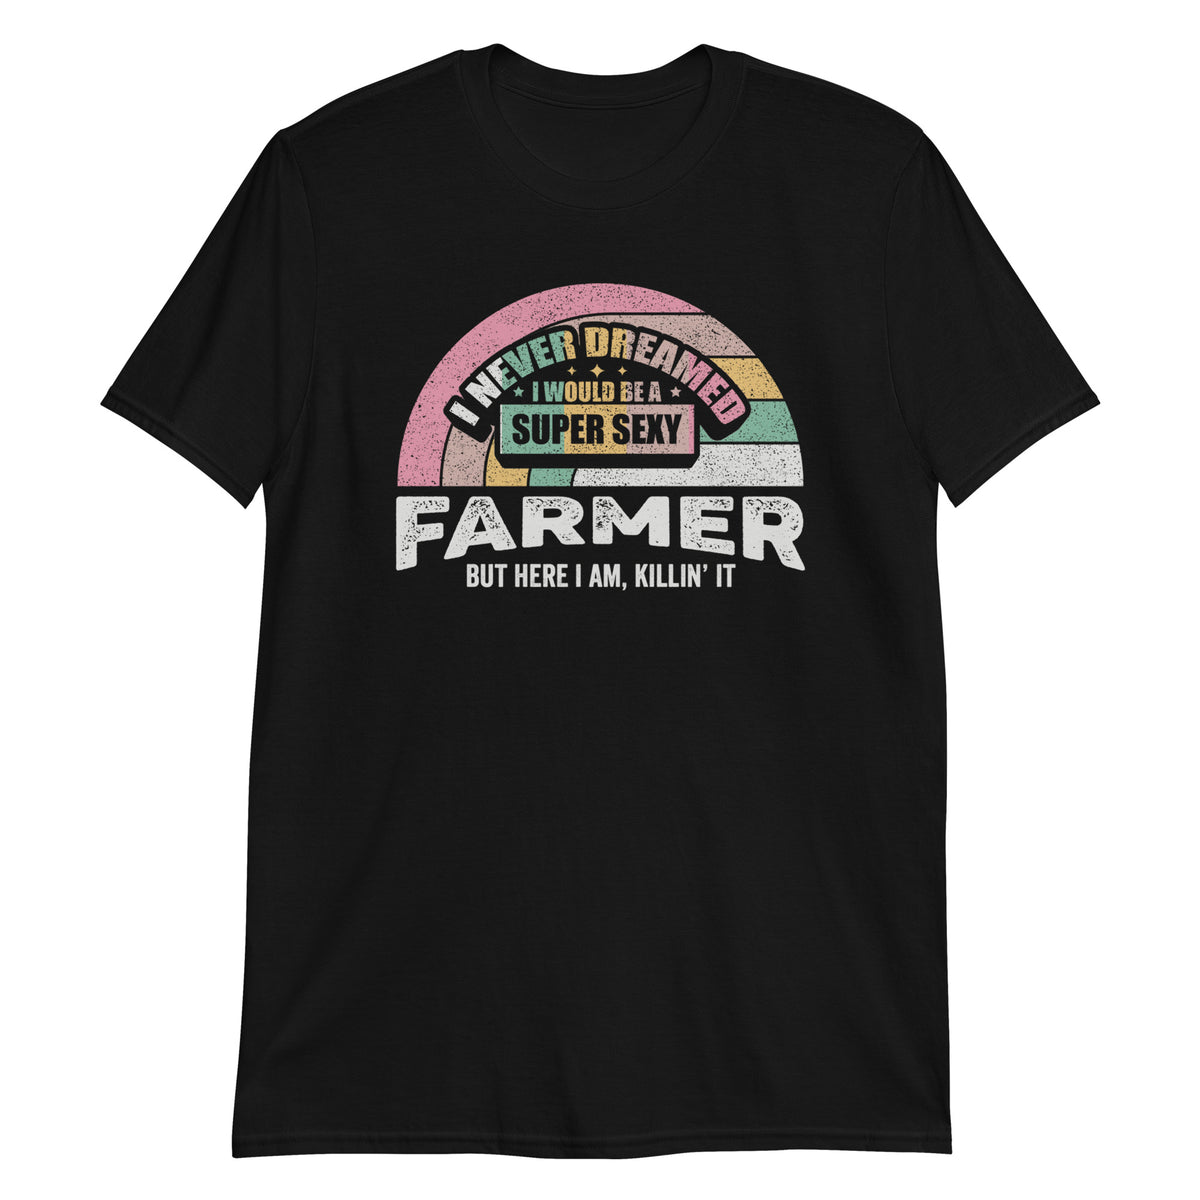 I Never Dreamed I Would Be a Super Sexy Farmer But Here I am Killin' it T-Shirt